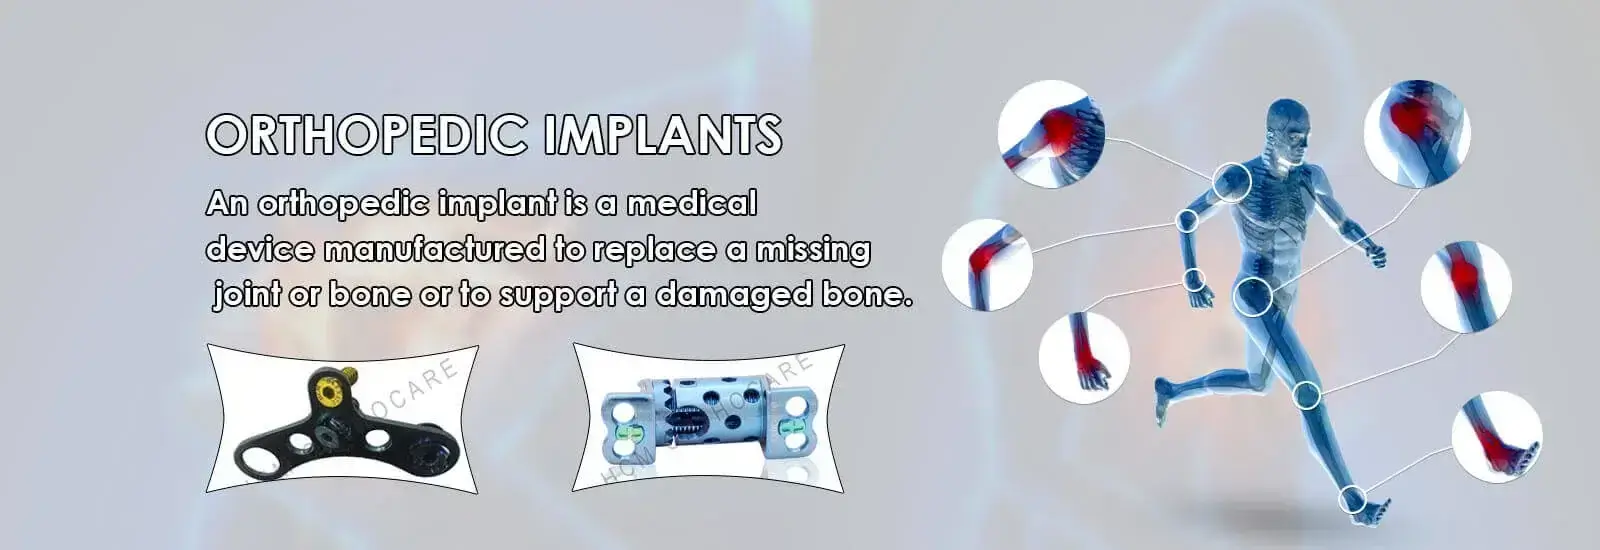 Orthopedic Implants Manufacturer